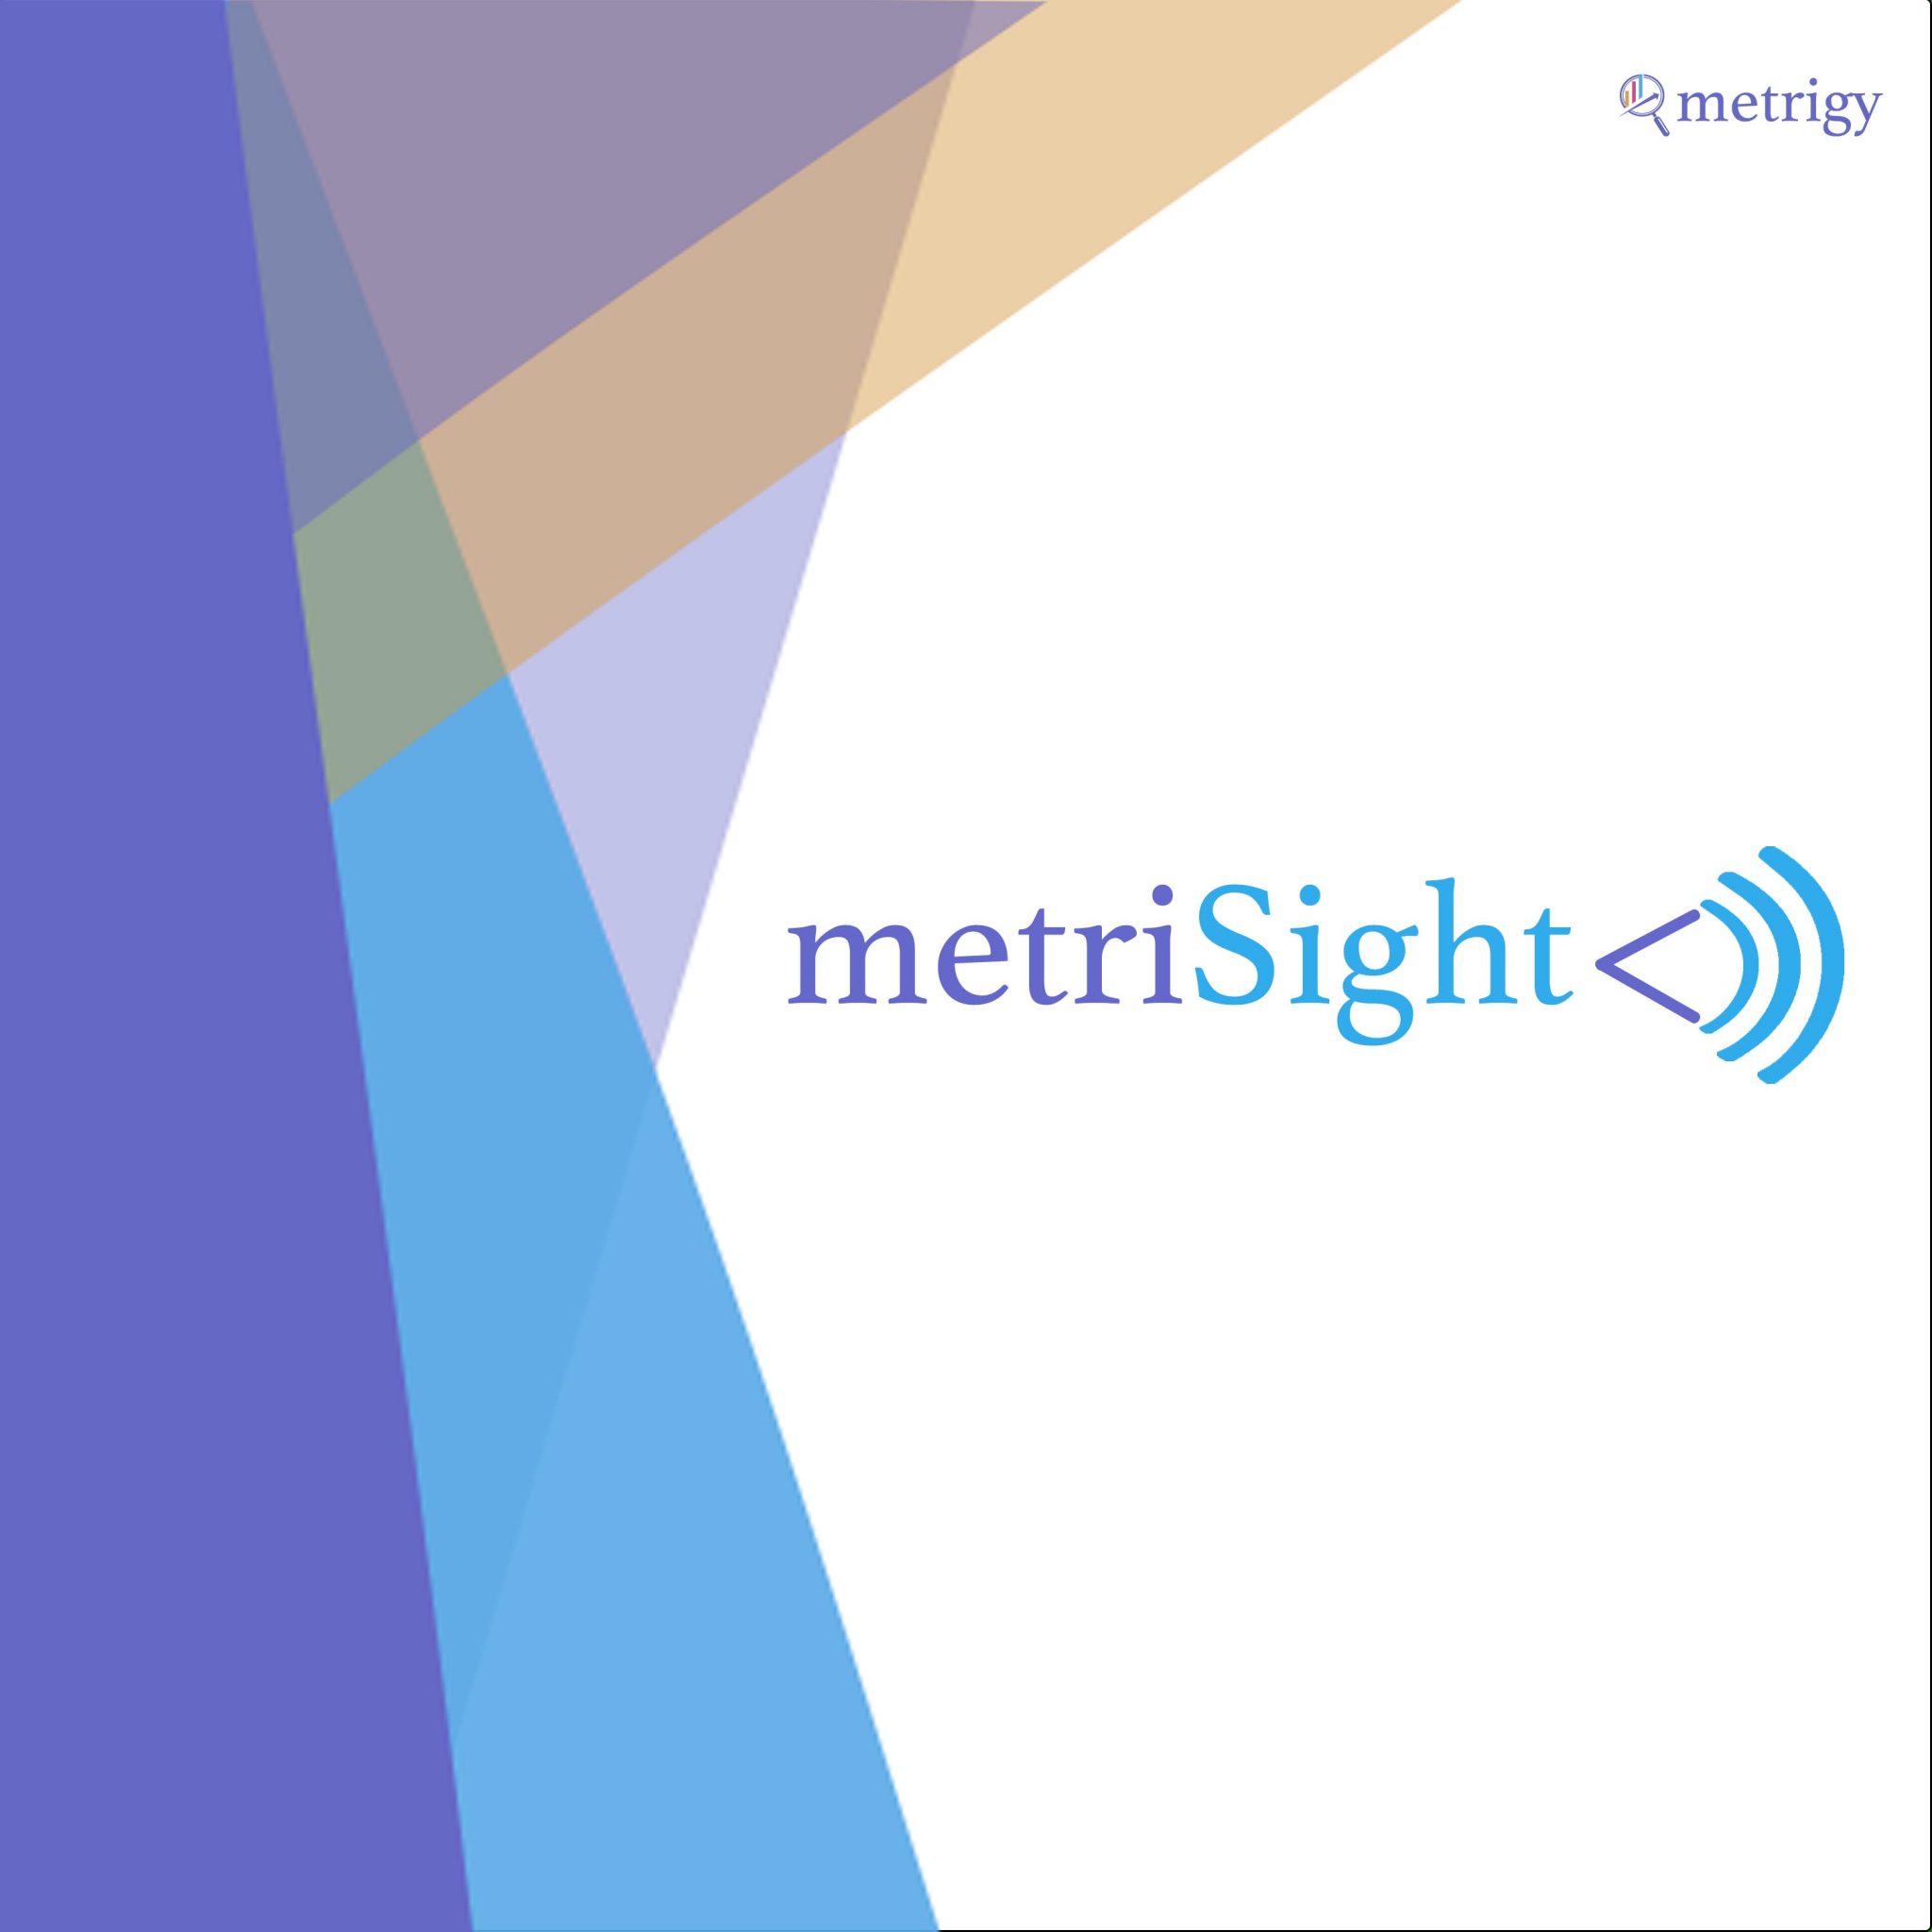 MetriSight Ep.32 - Metrigy's Latest Workplace Collaboration Data